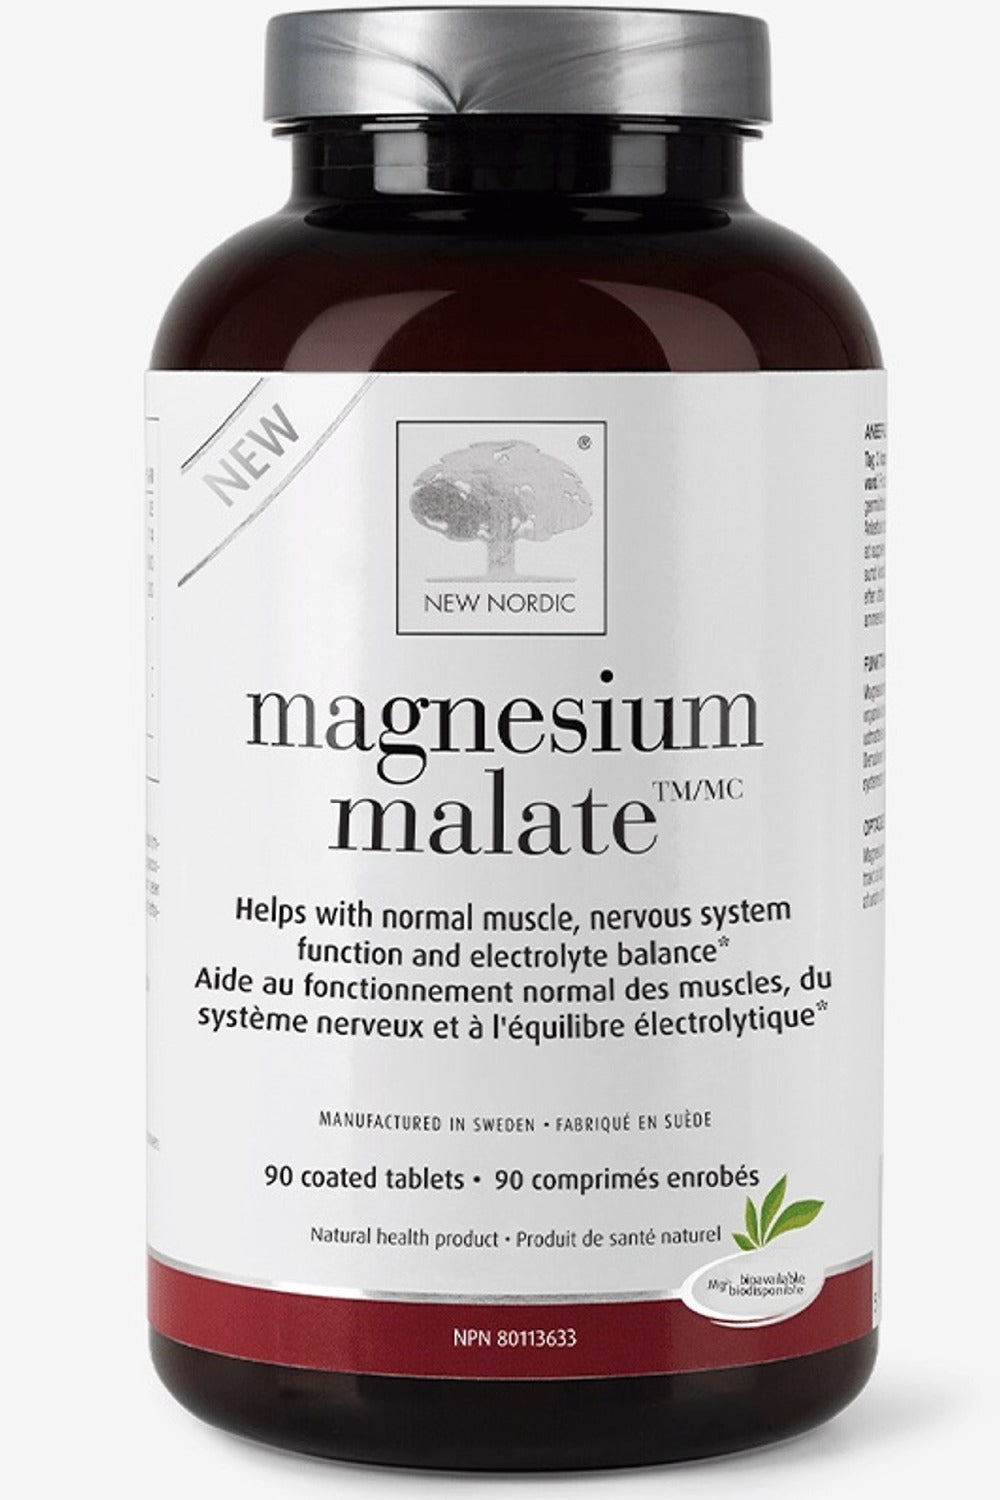 NEW NORDIC Magnesium Malate (90 tabs)